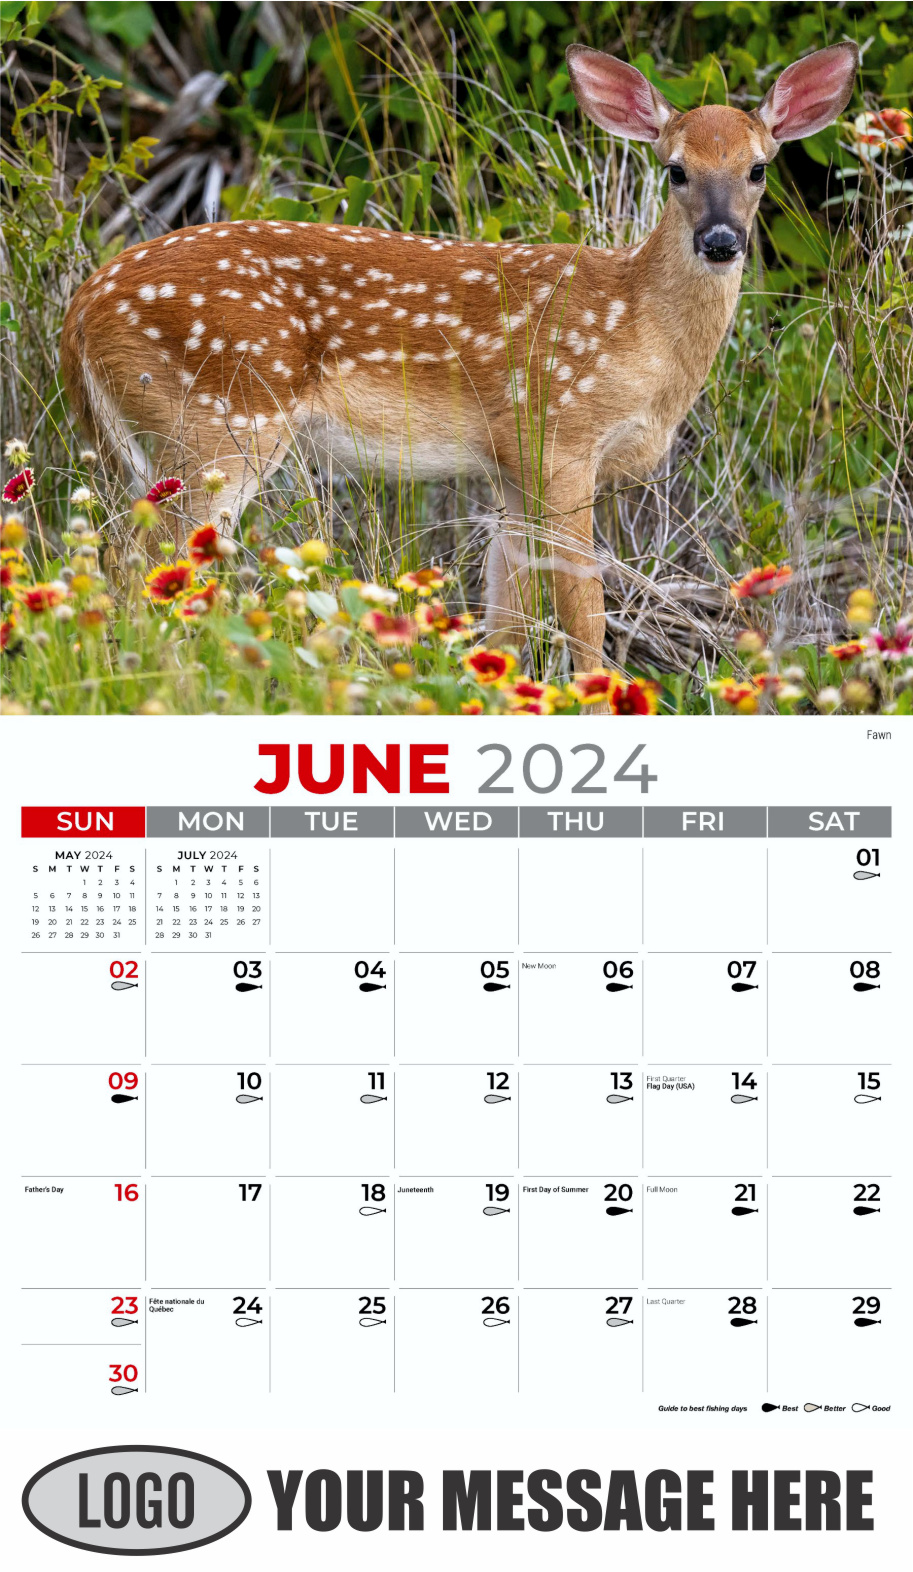 North American Wildlife 2024 Business Promo Wall Calendar - June